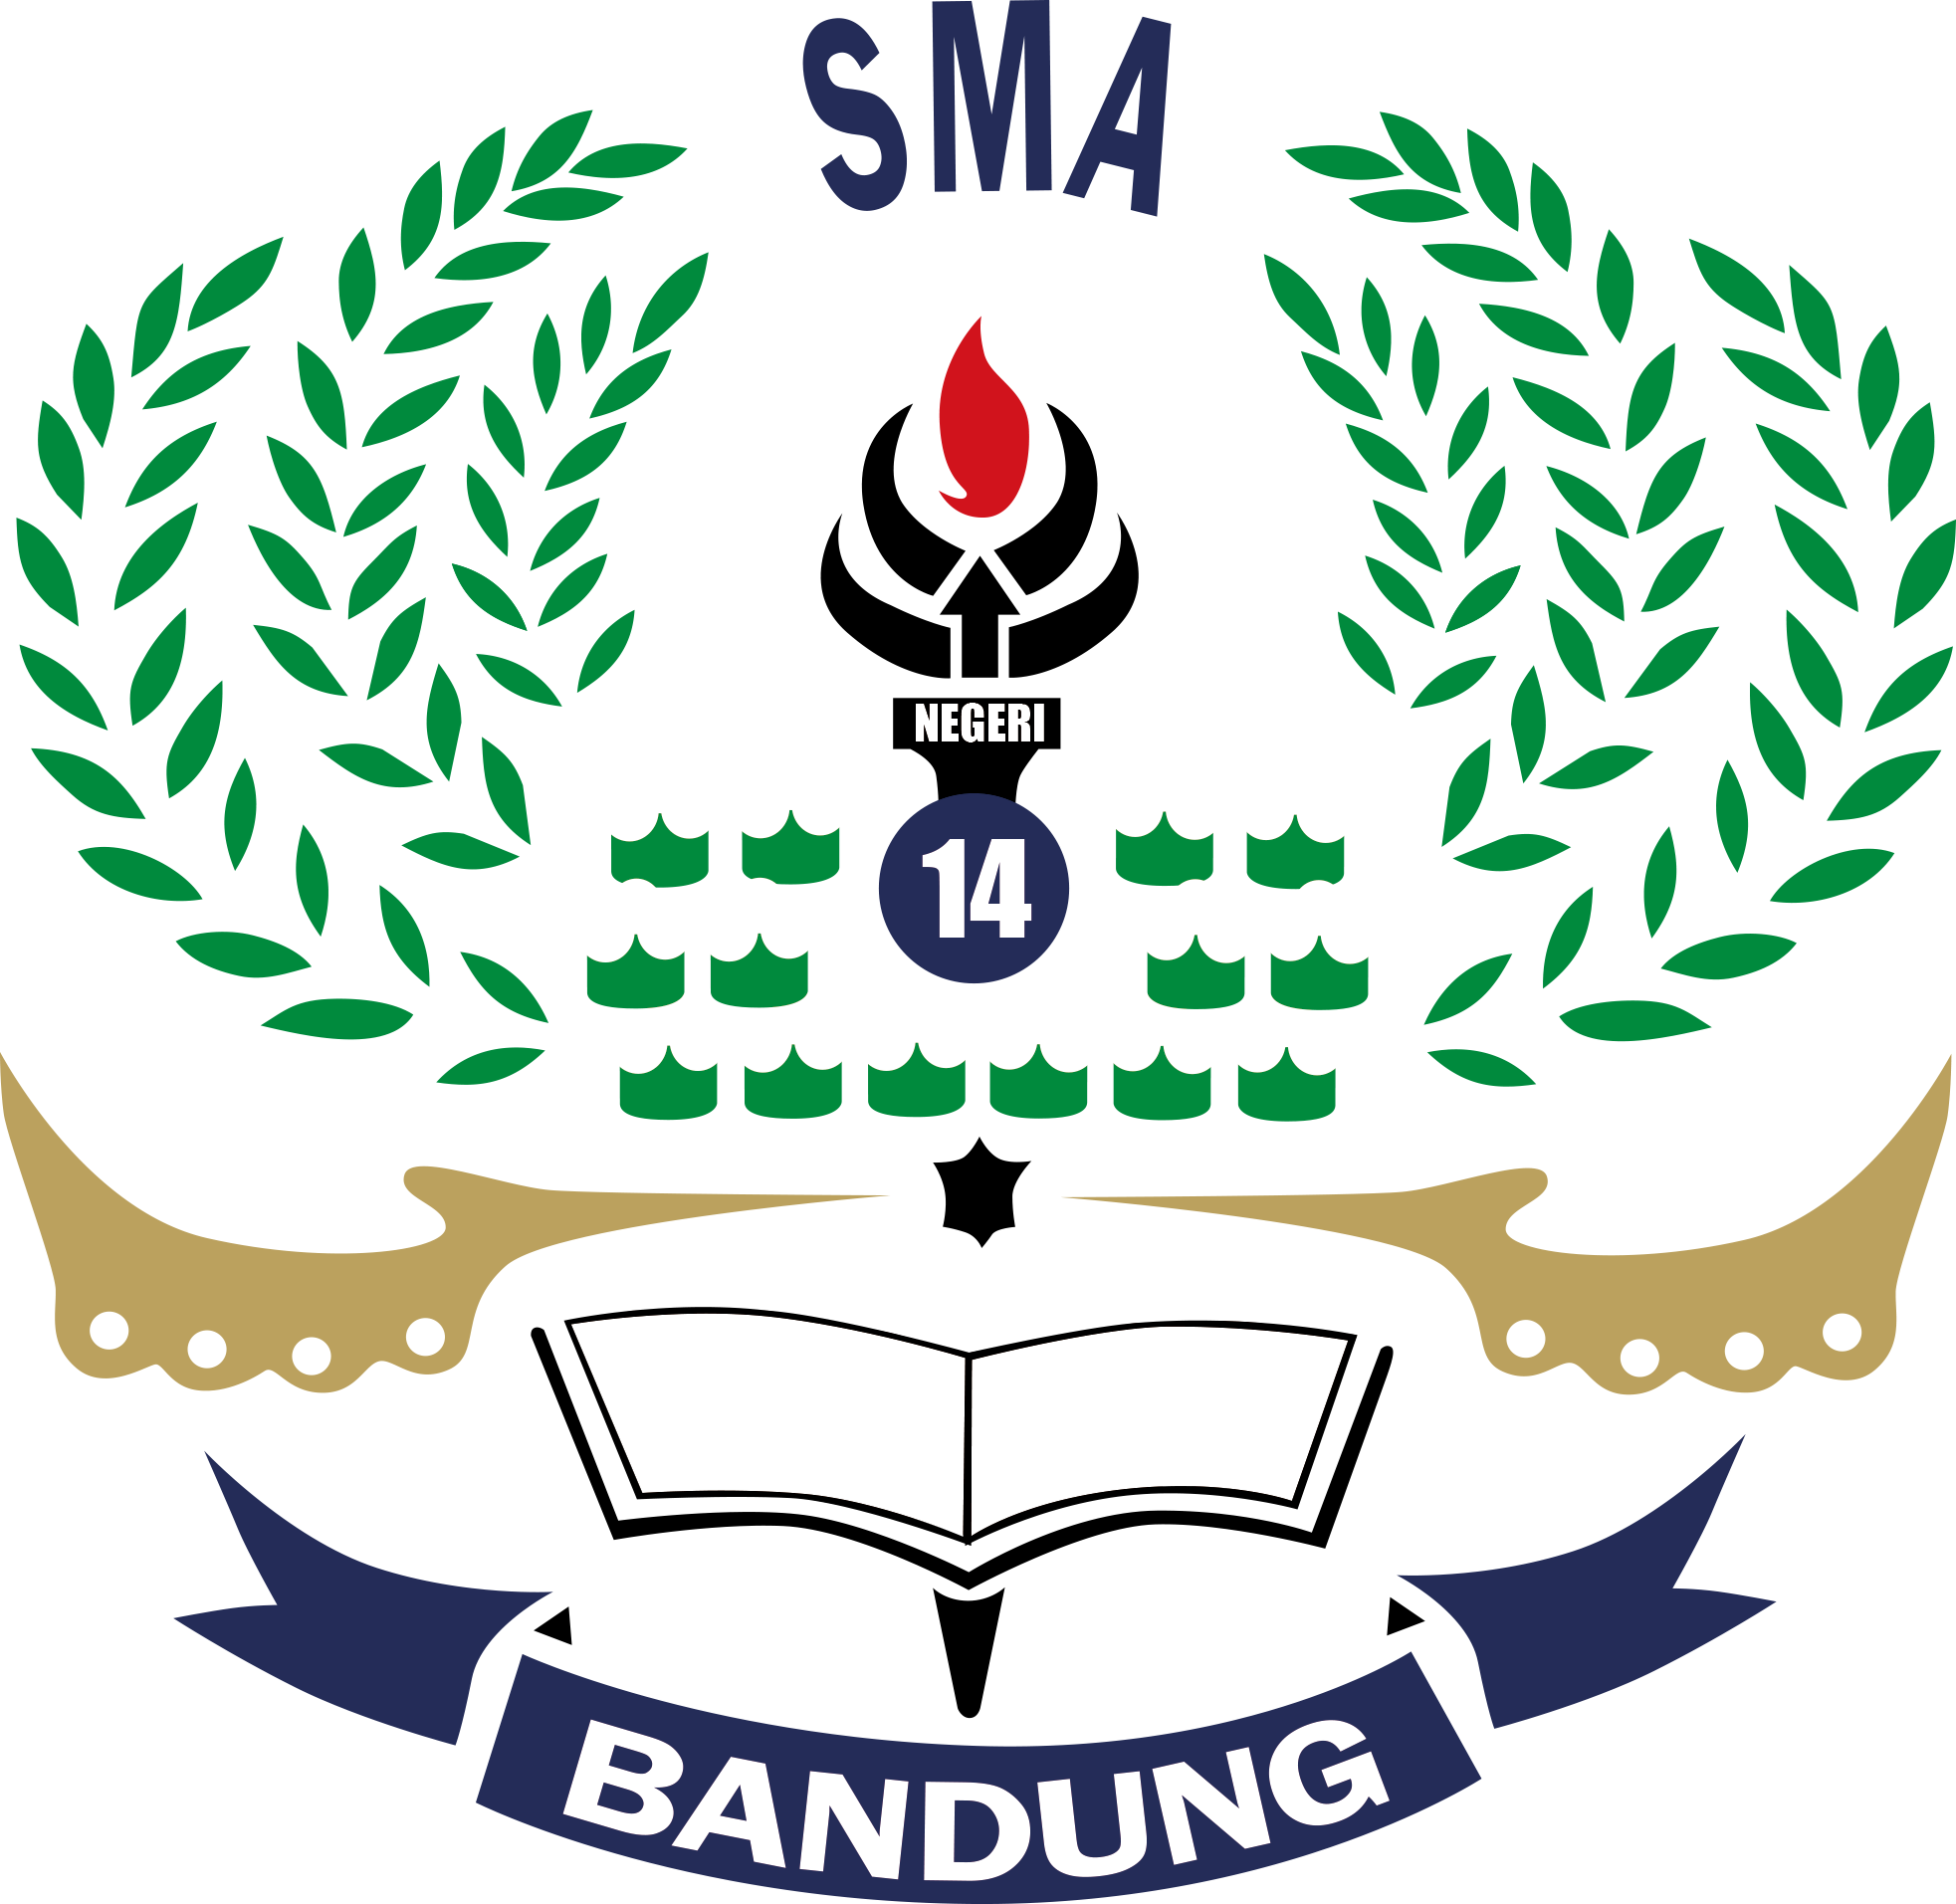 SMA Negeri 14 Bandung